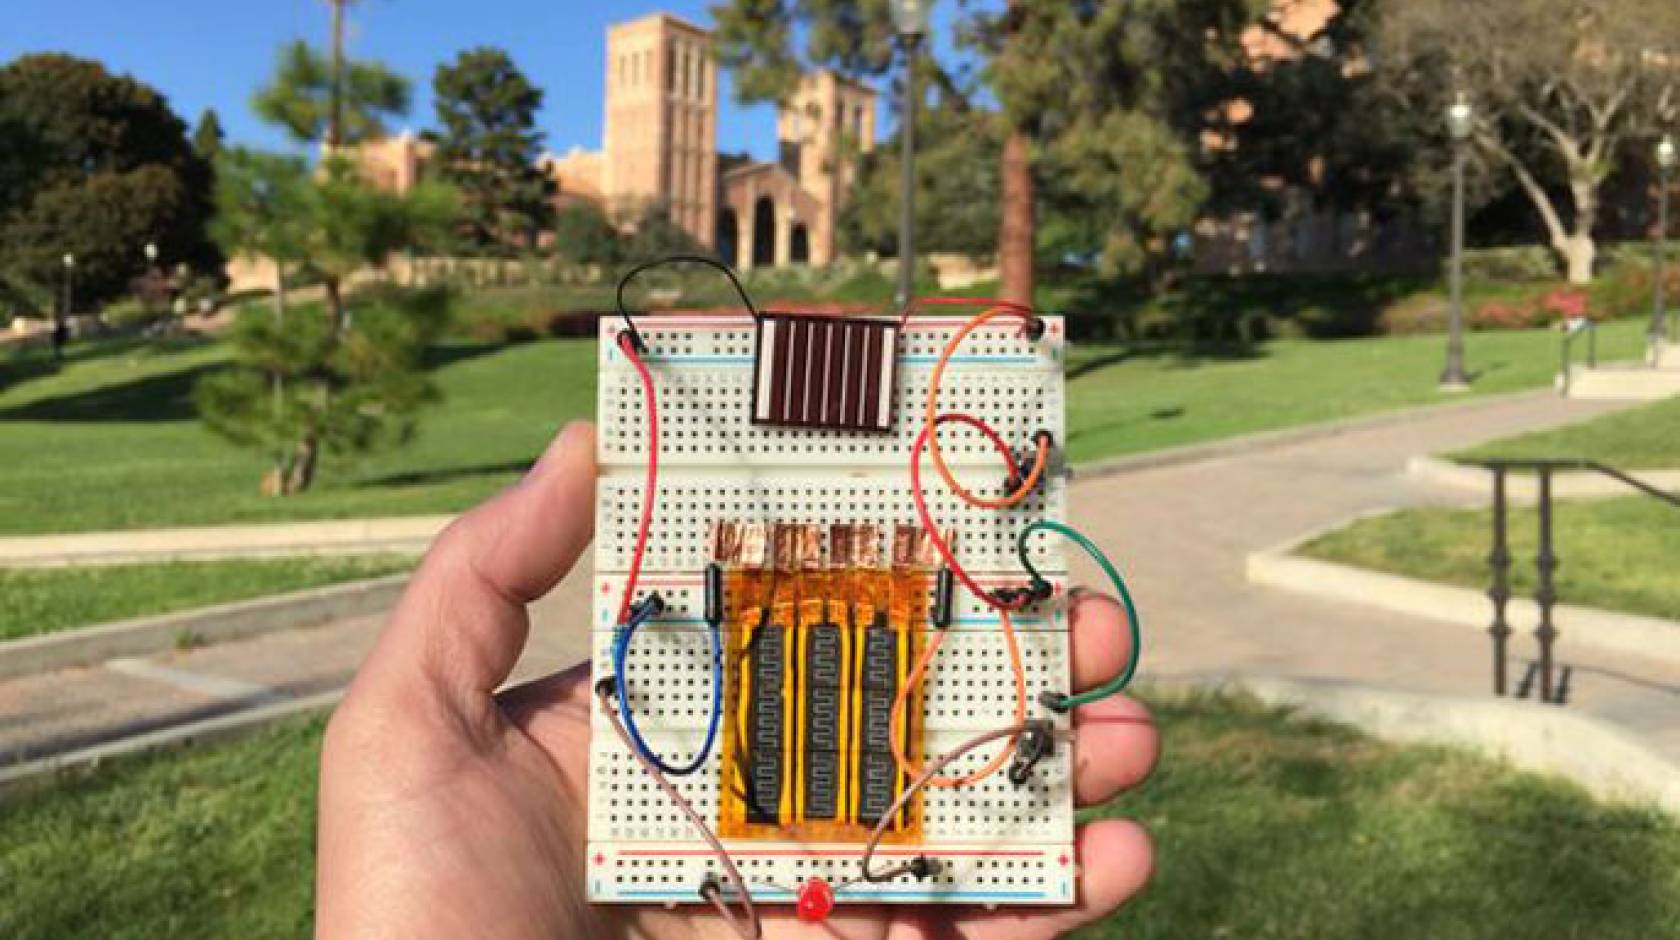 UCLA scientists California NanoSystems Institute